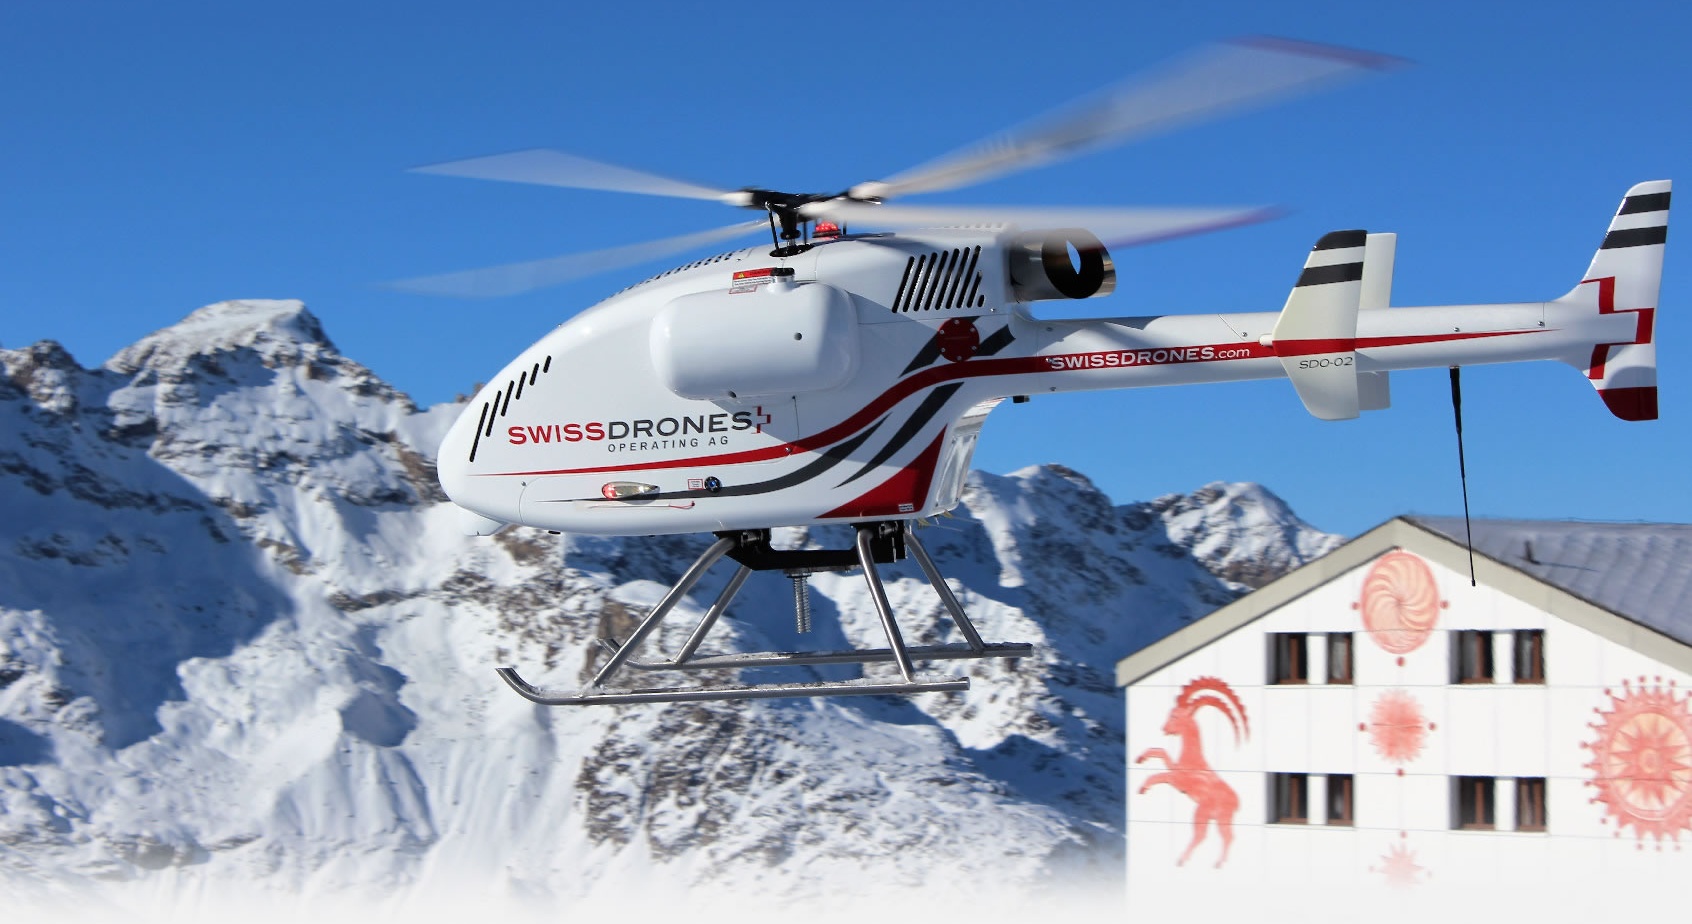 Swissdrones' SDO-V2